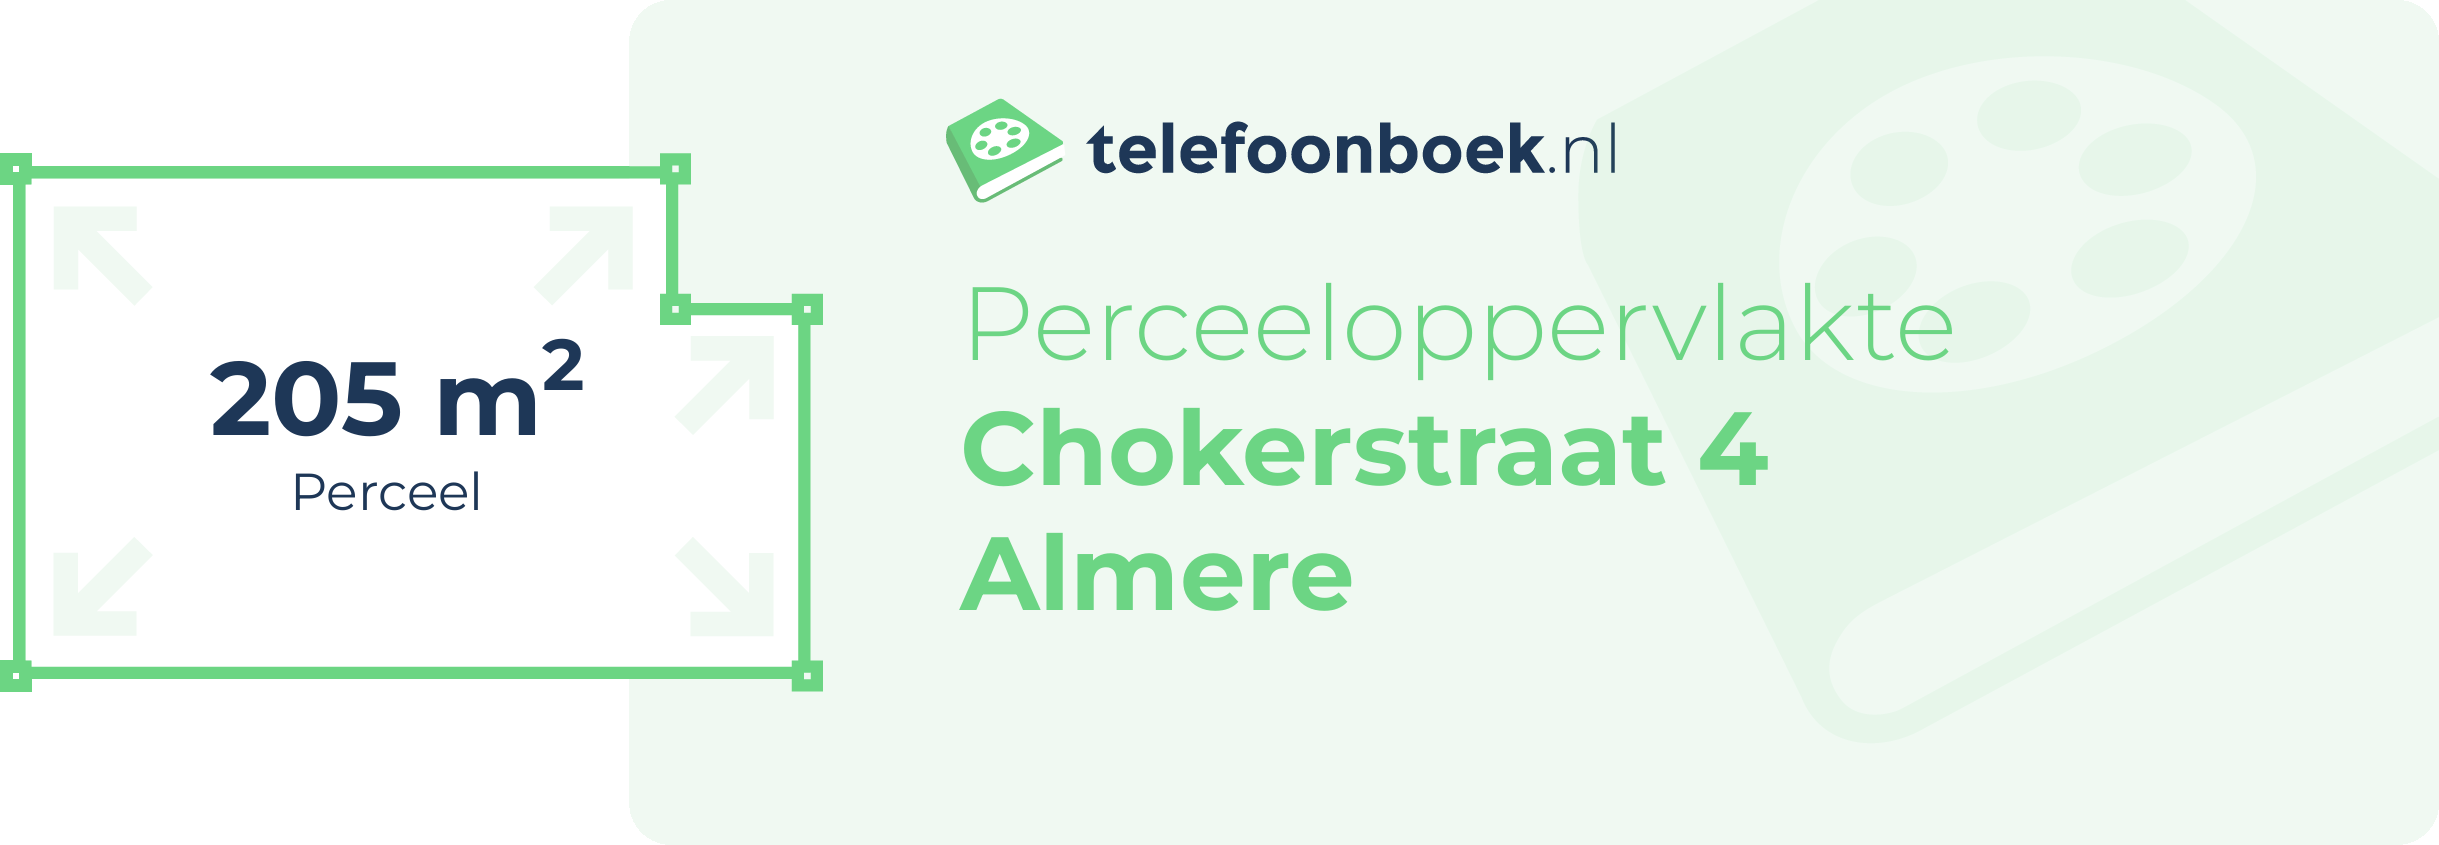 Perceeloppervlakte Chokerstraat 4 Almere